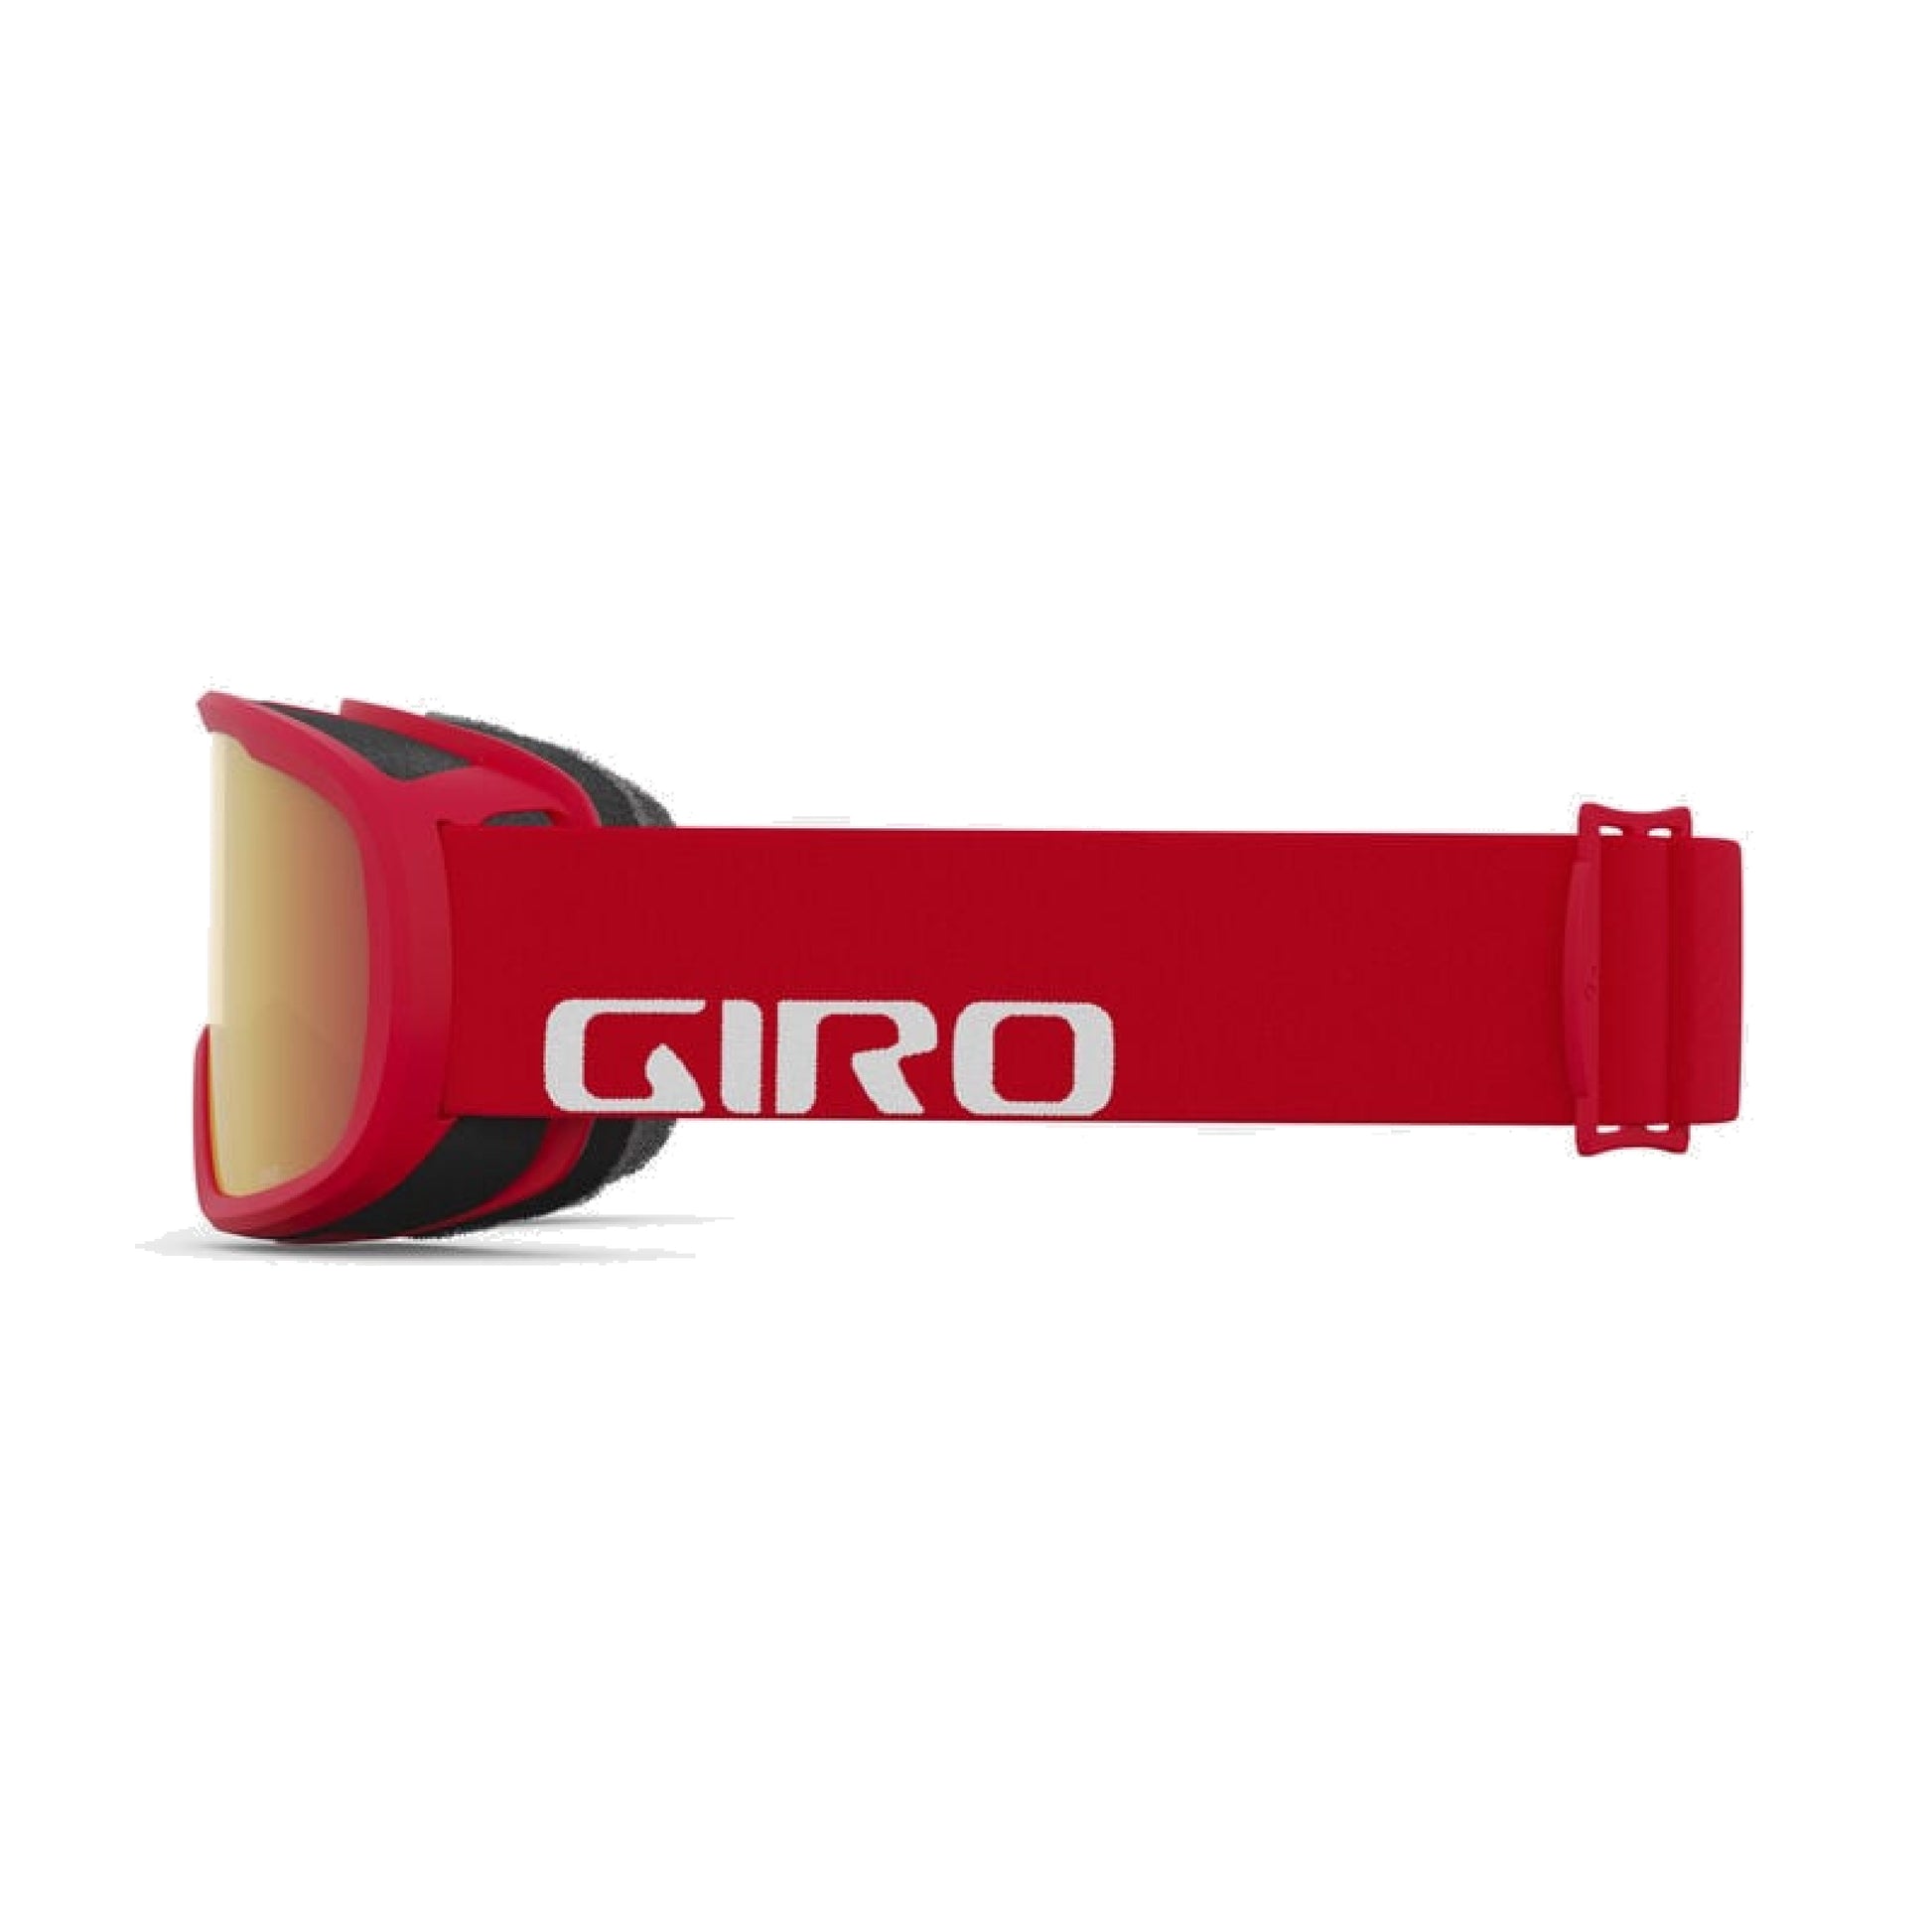 Giro Cruz Snow Goggles Red & White Wordmark / Amber Scarlet Snow Goggles